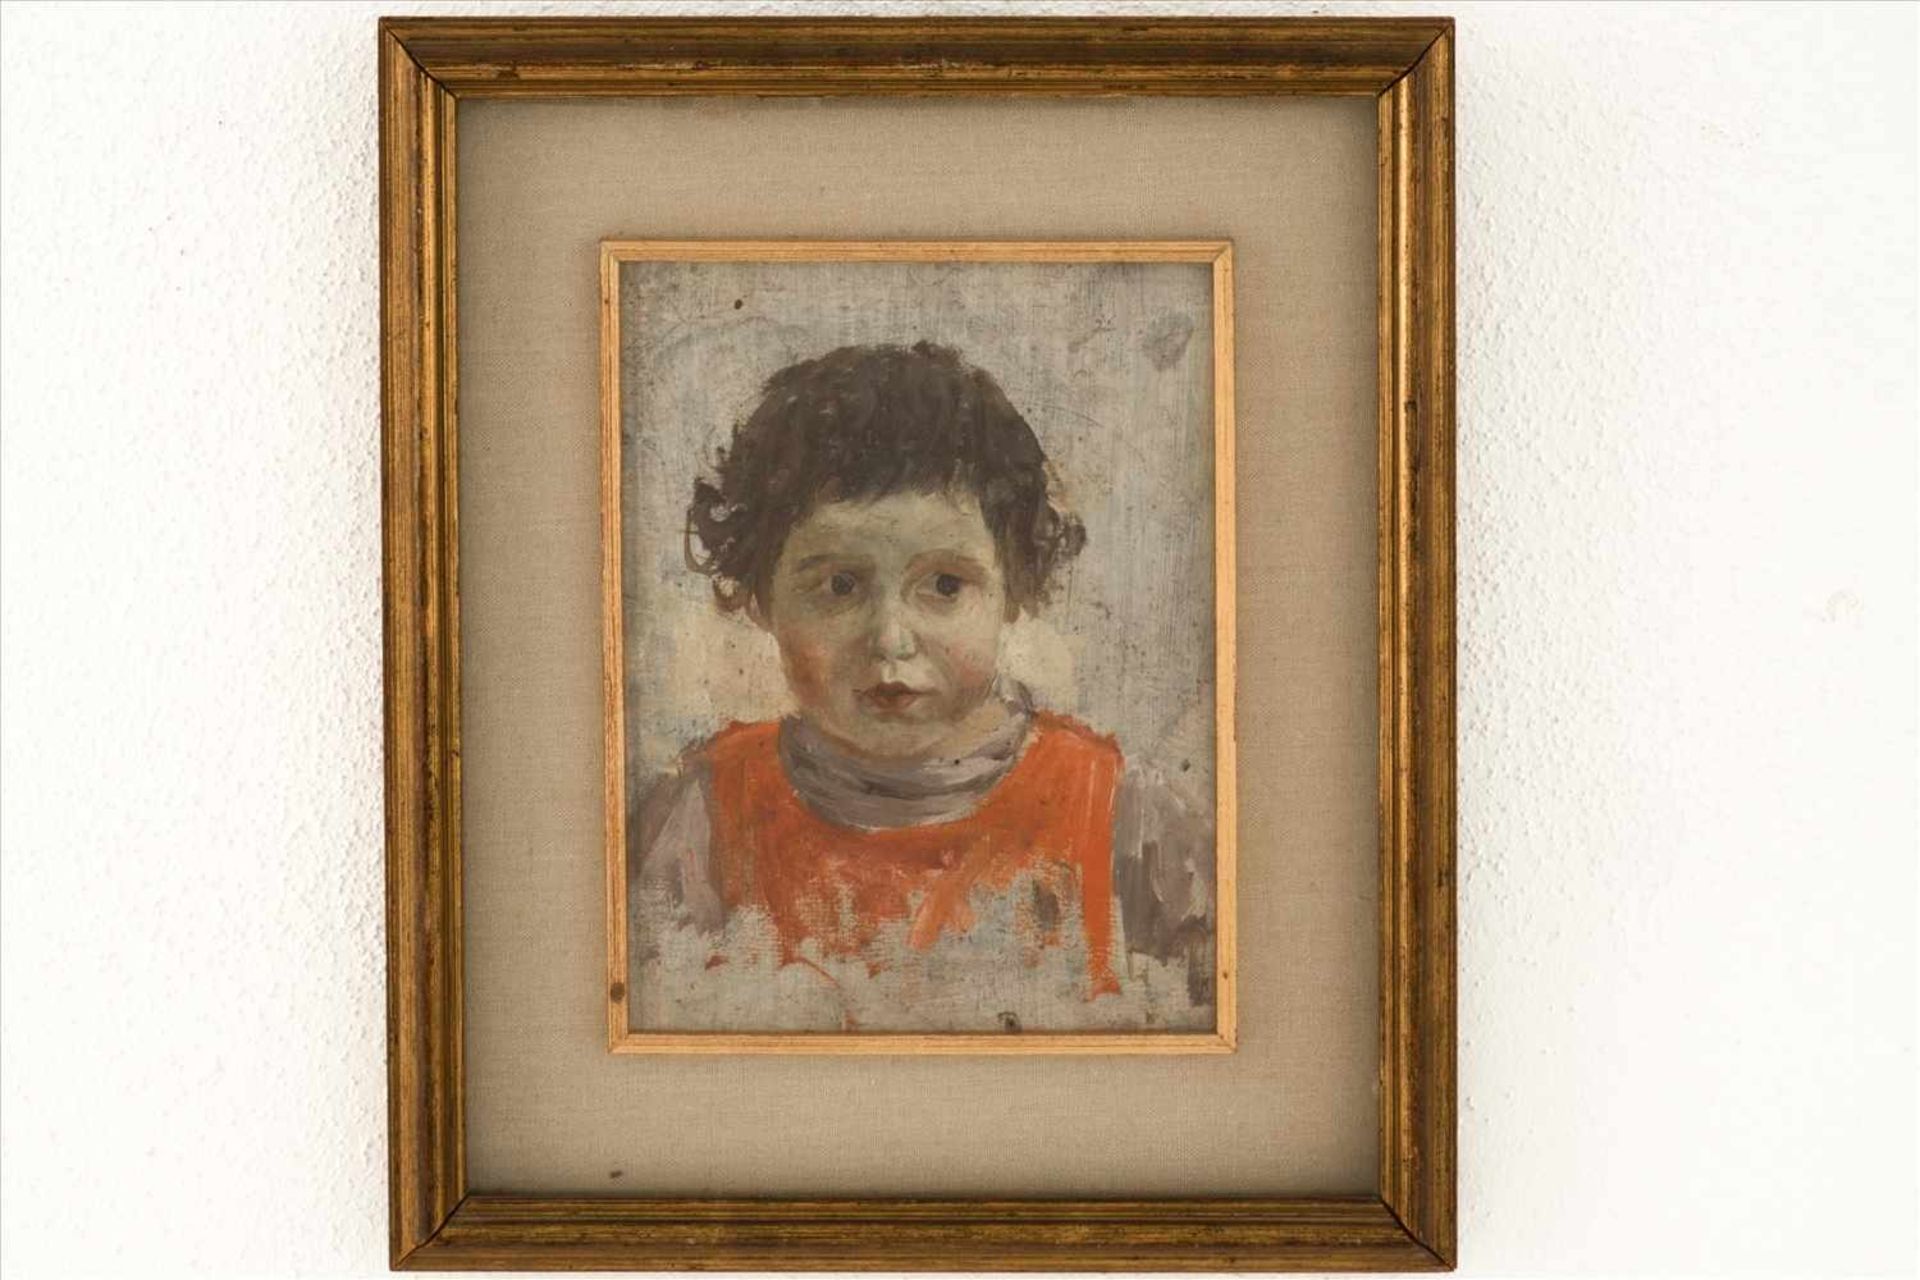 KinderportraitÖl/ Karton, um 1900, unsign.Maße Rahmen: H38,5 x B33cmMaße Bild: H25 x B19,5cm.Child's